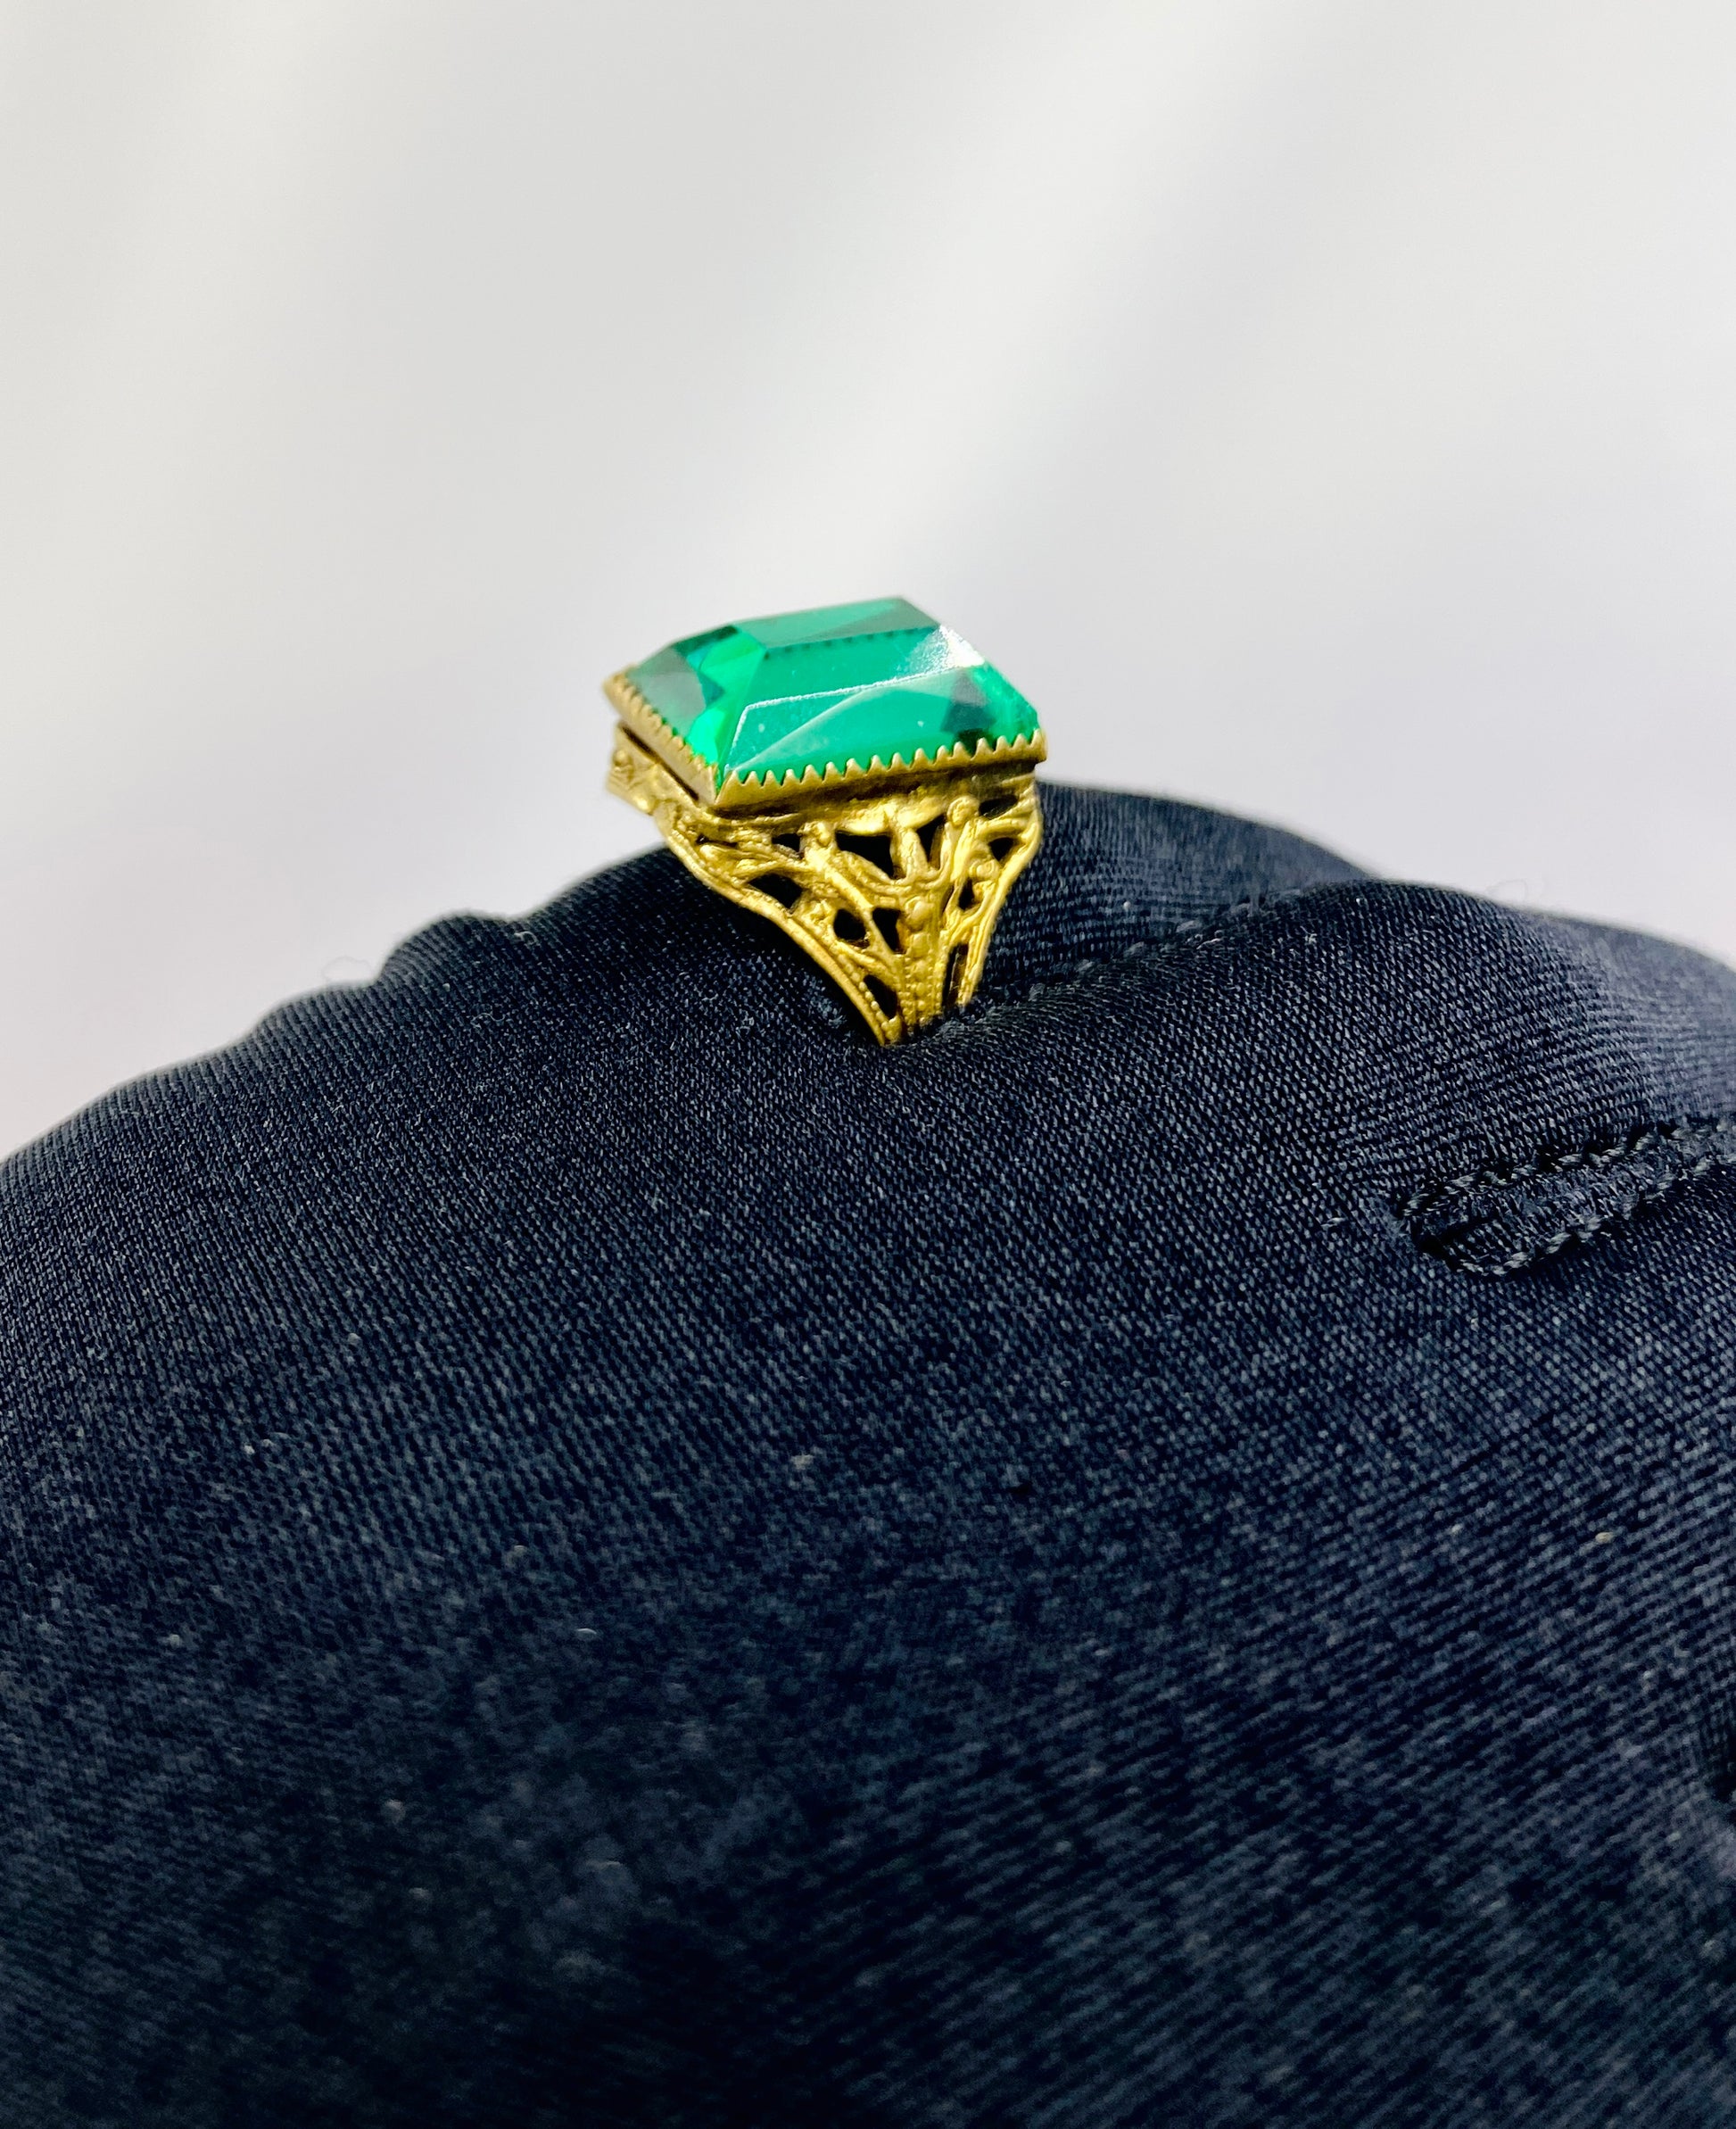 Antique Victorian Green Emerald-Cut Glass Filigree Ring, Size 6